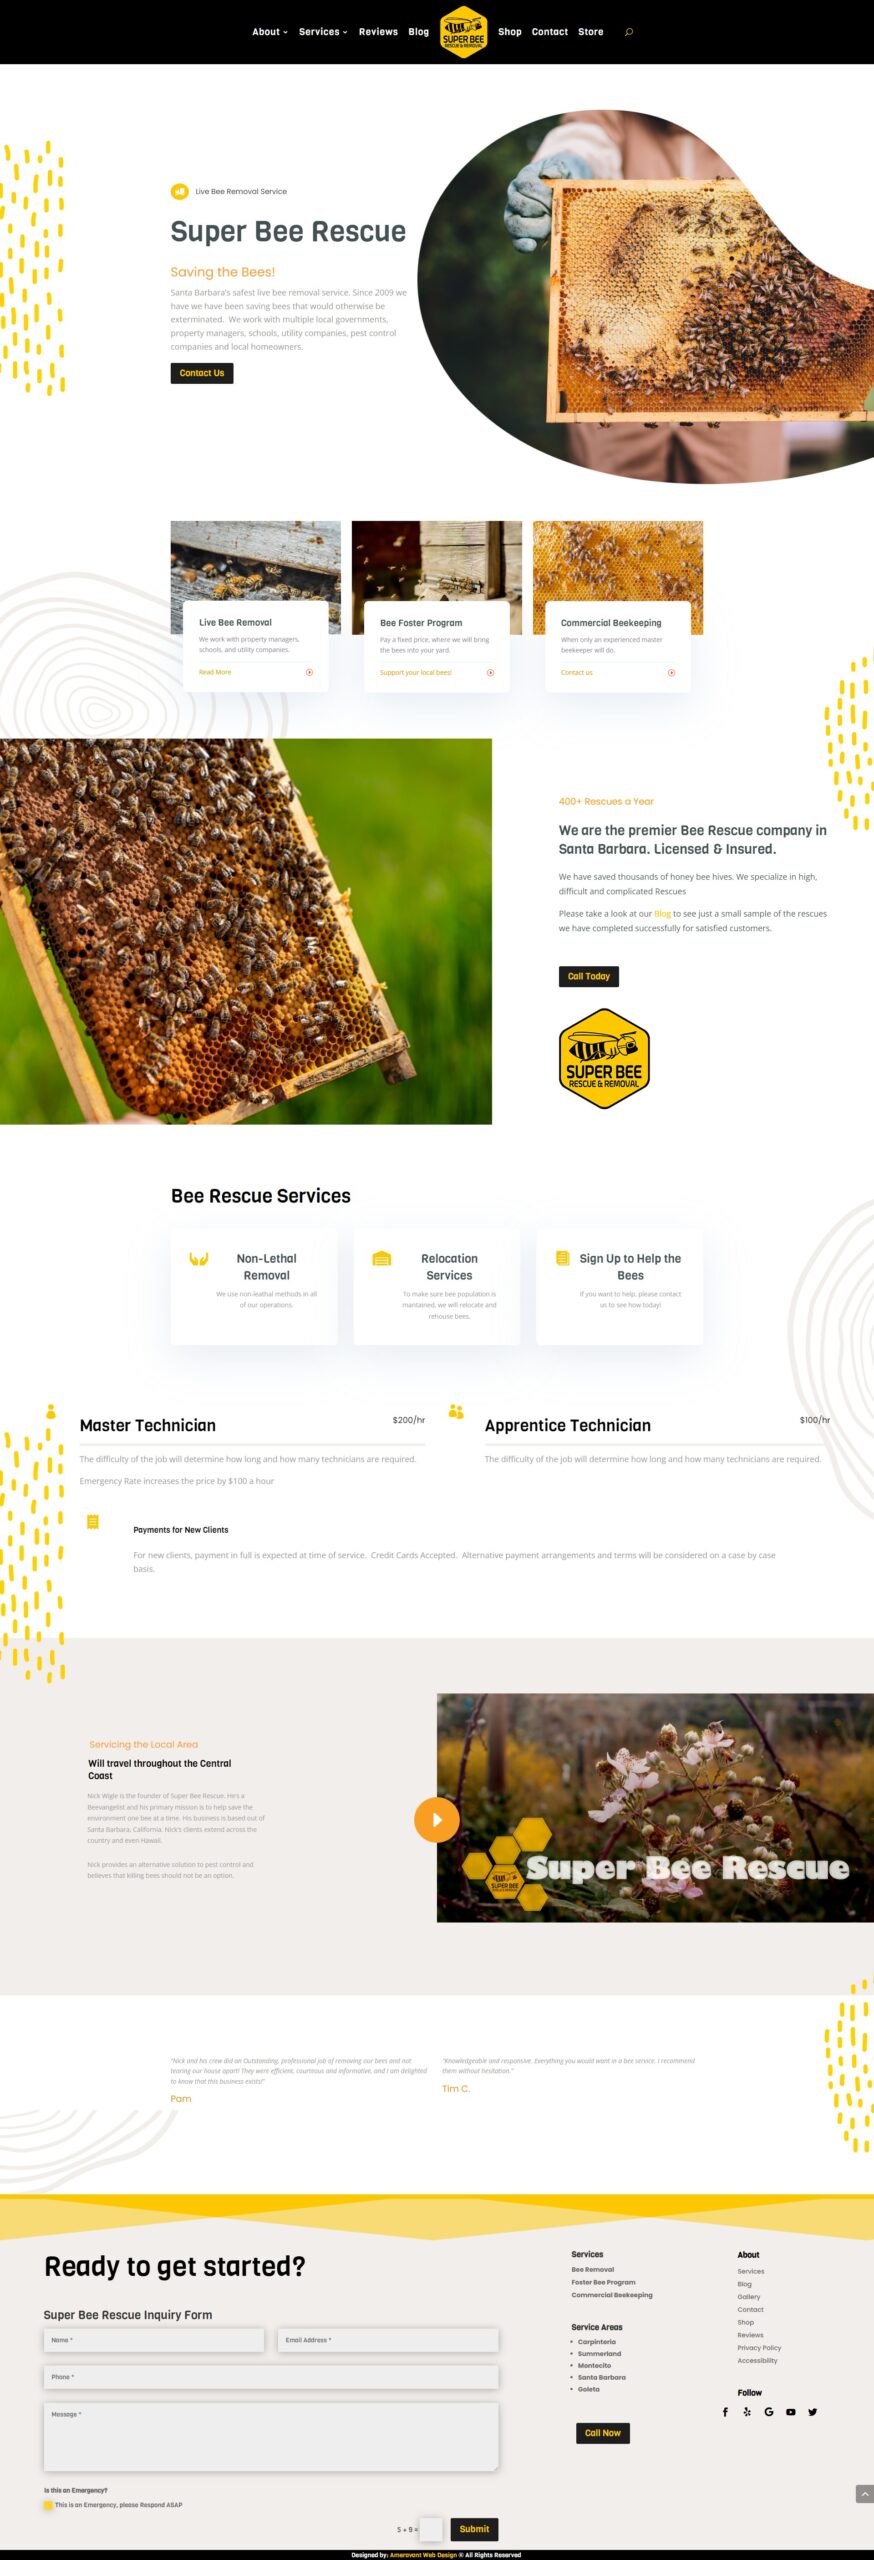 Super Bee Rescue Homepage